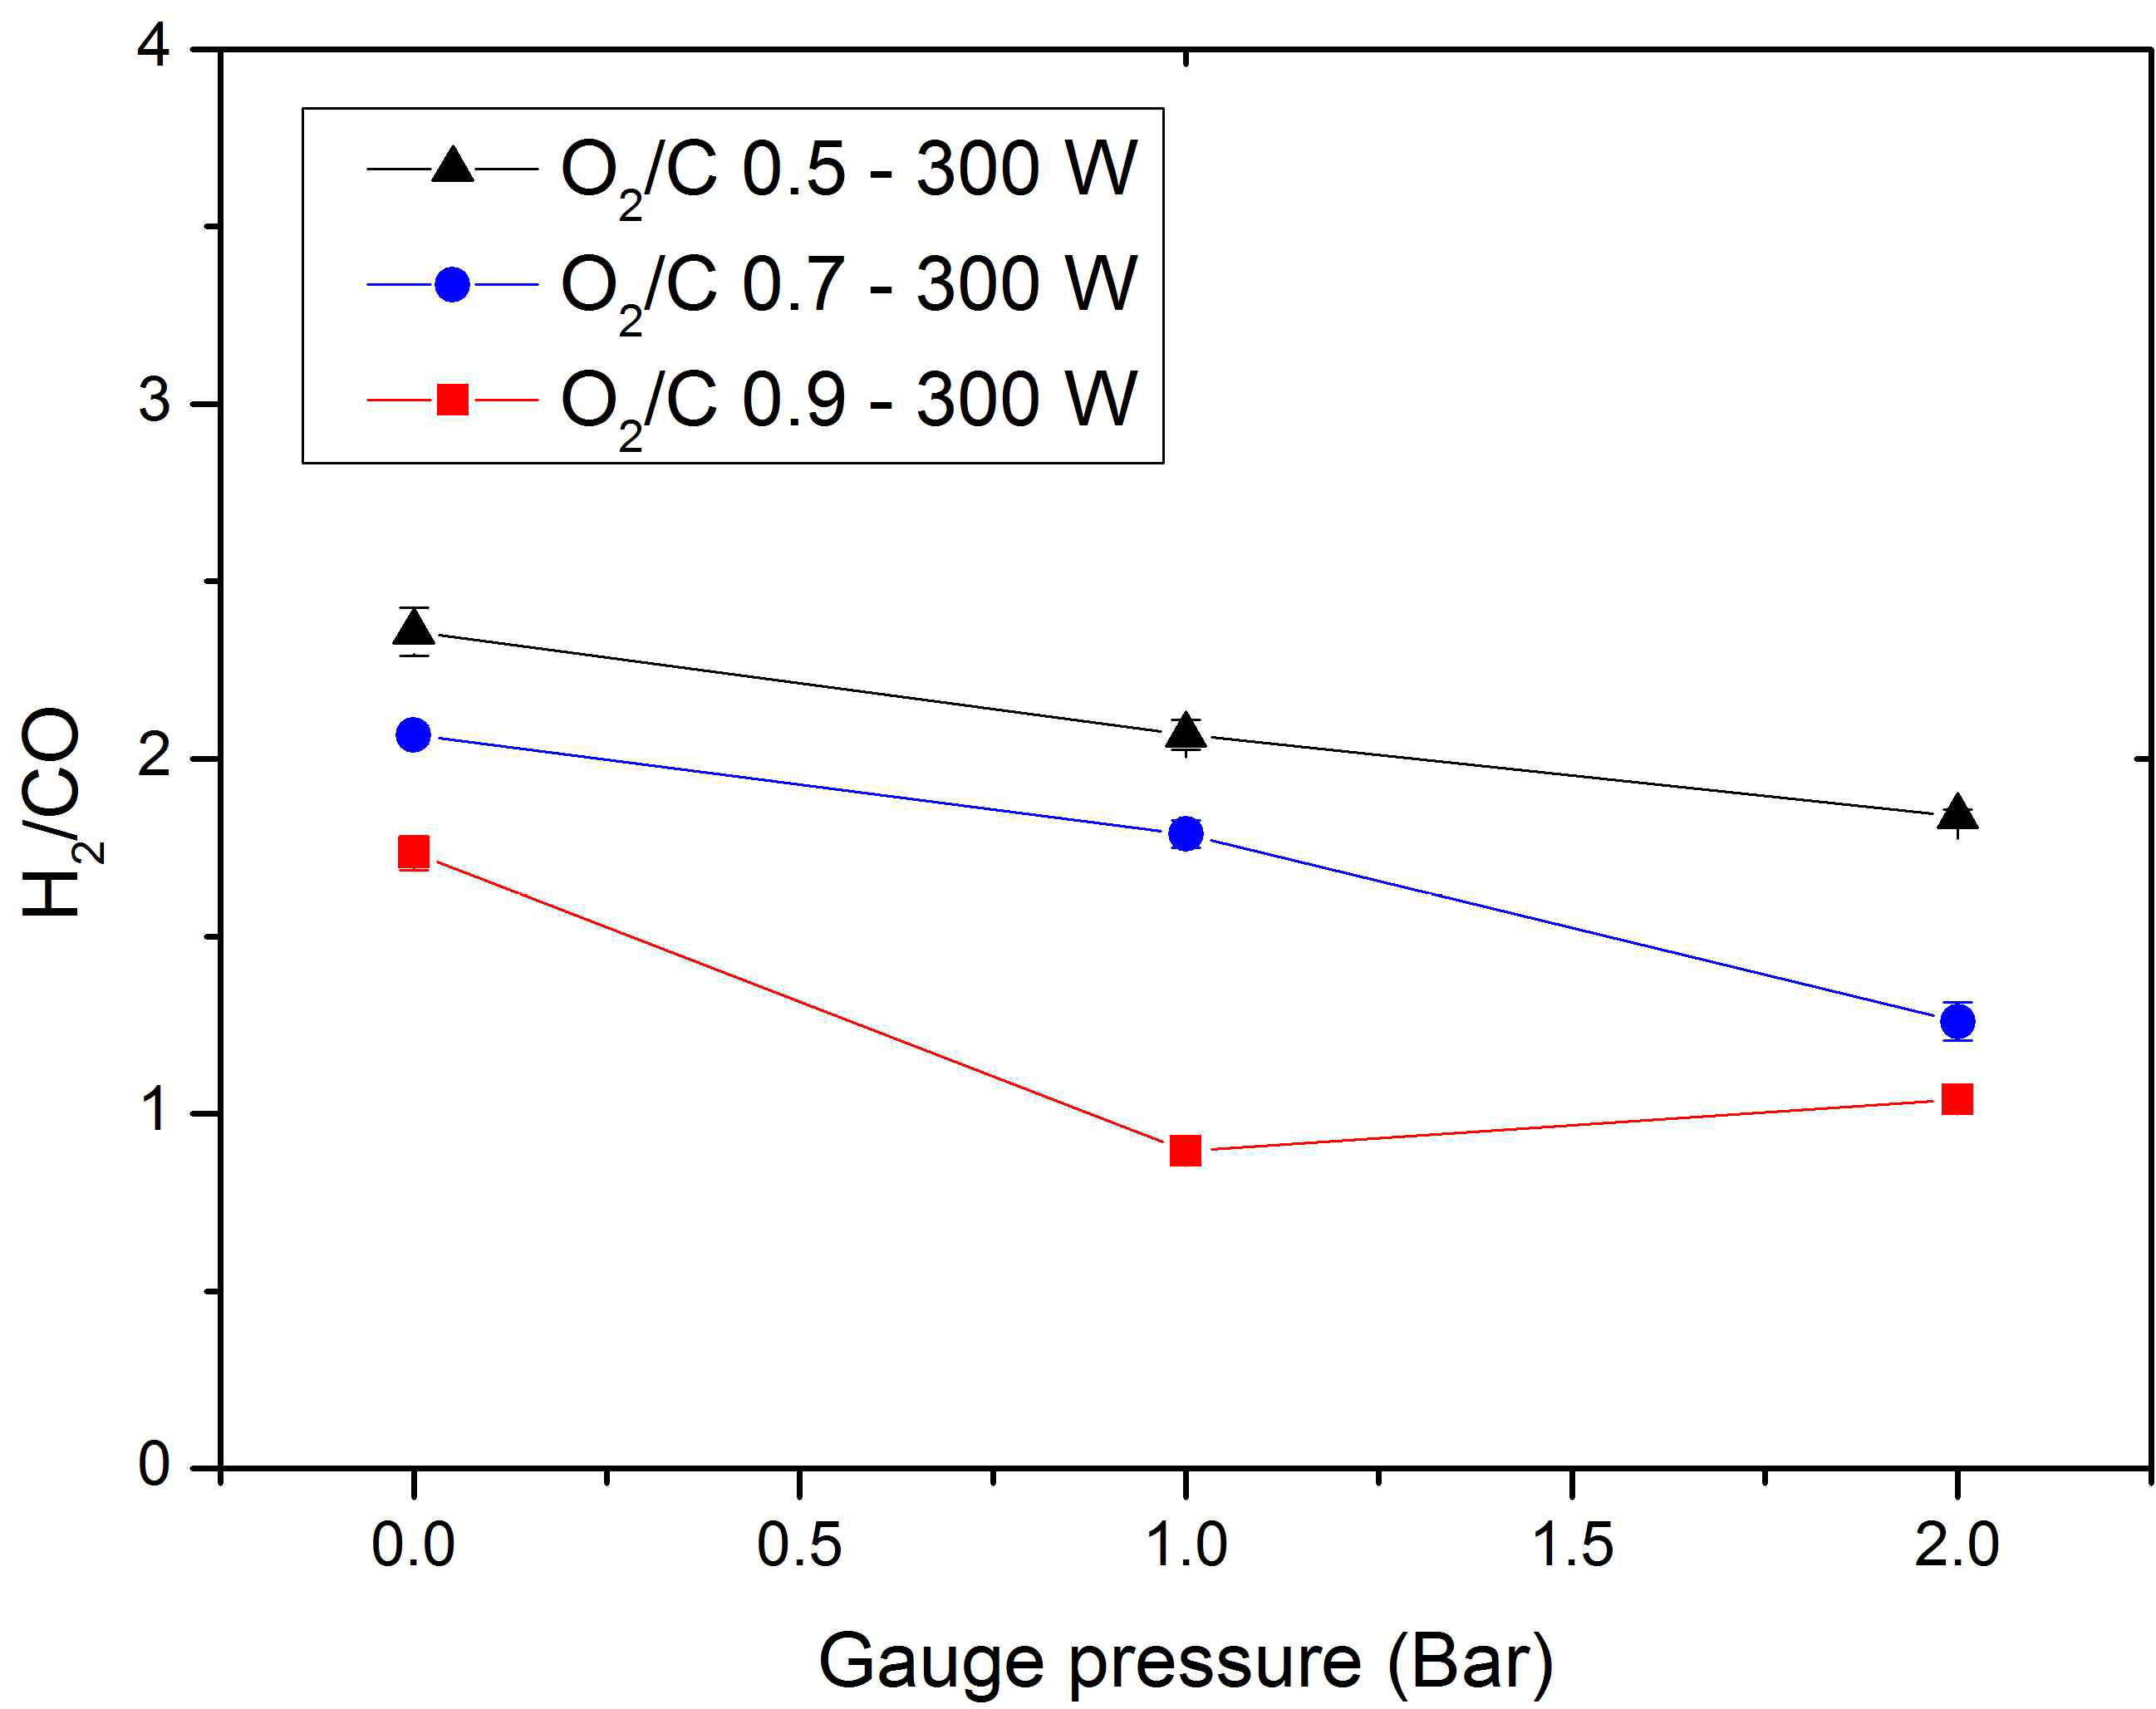 H2/CO at various gauge pressure, input power = 300 W